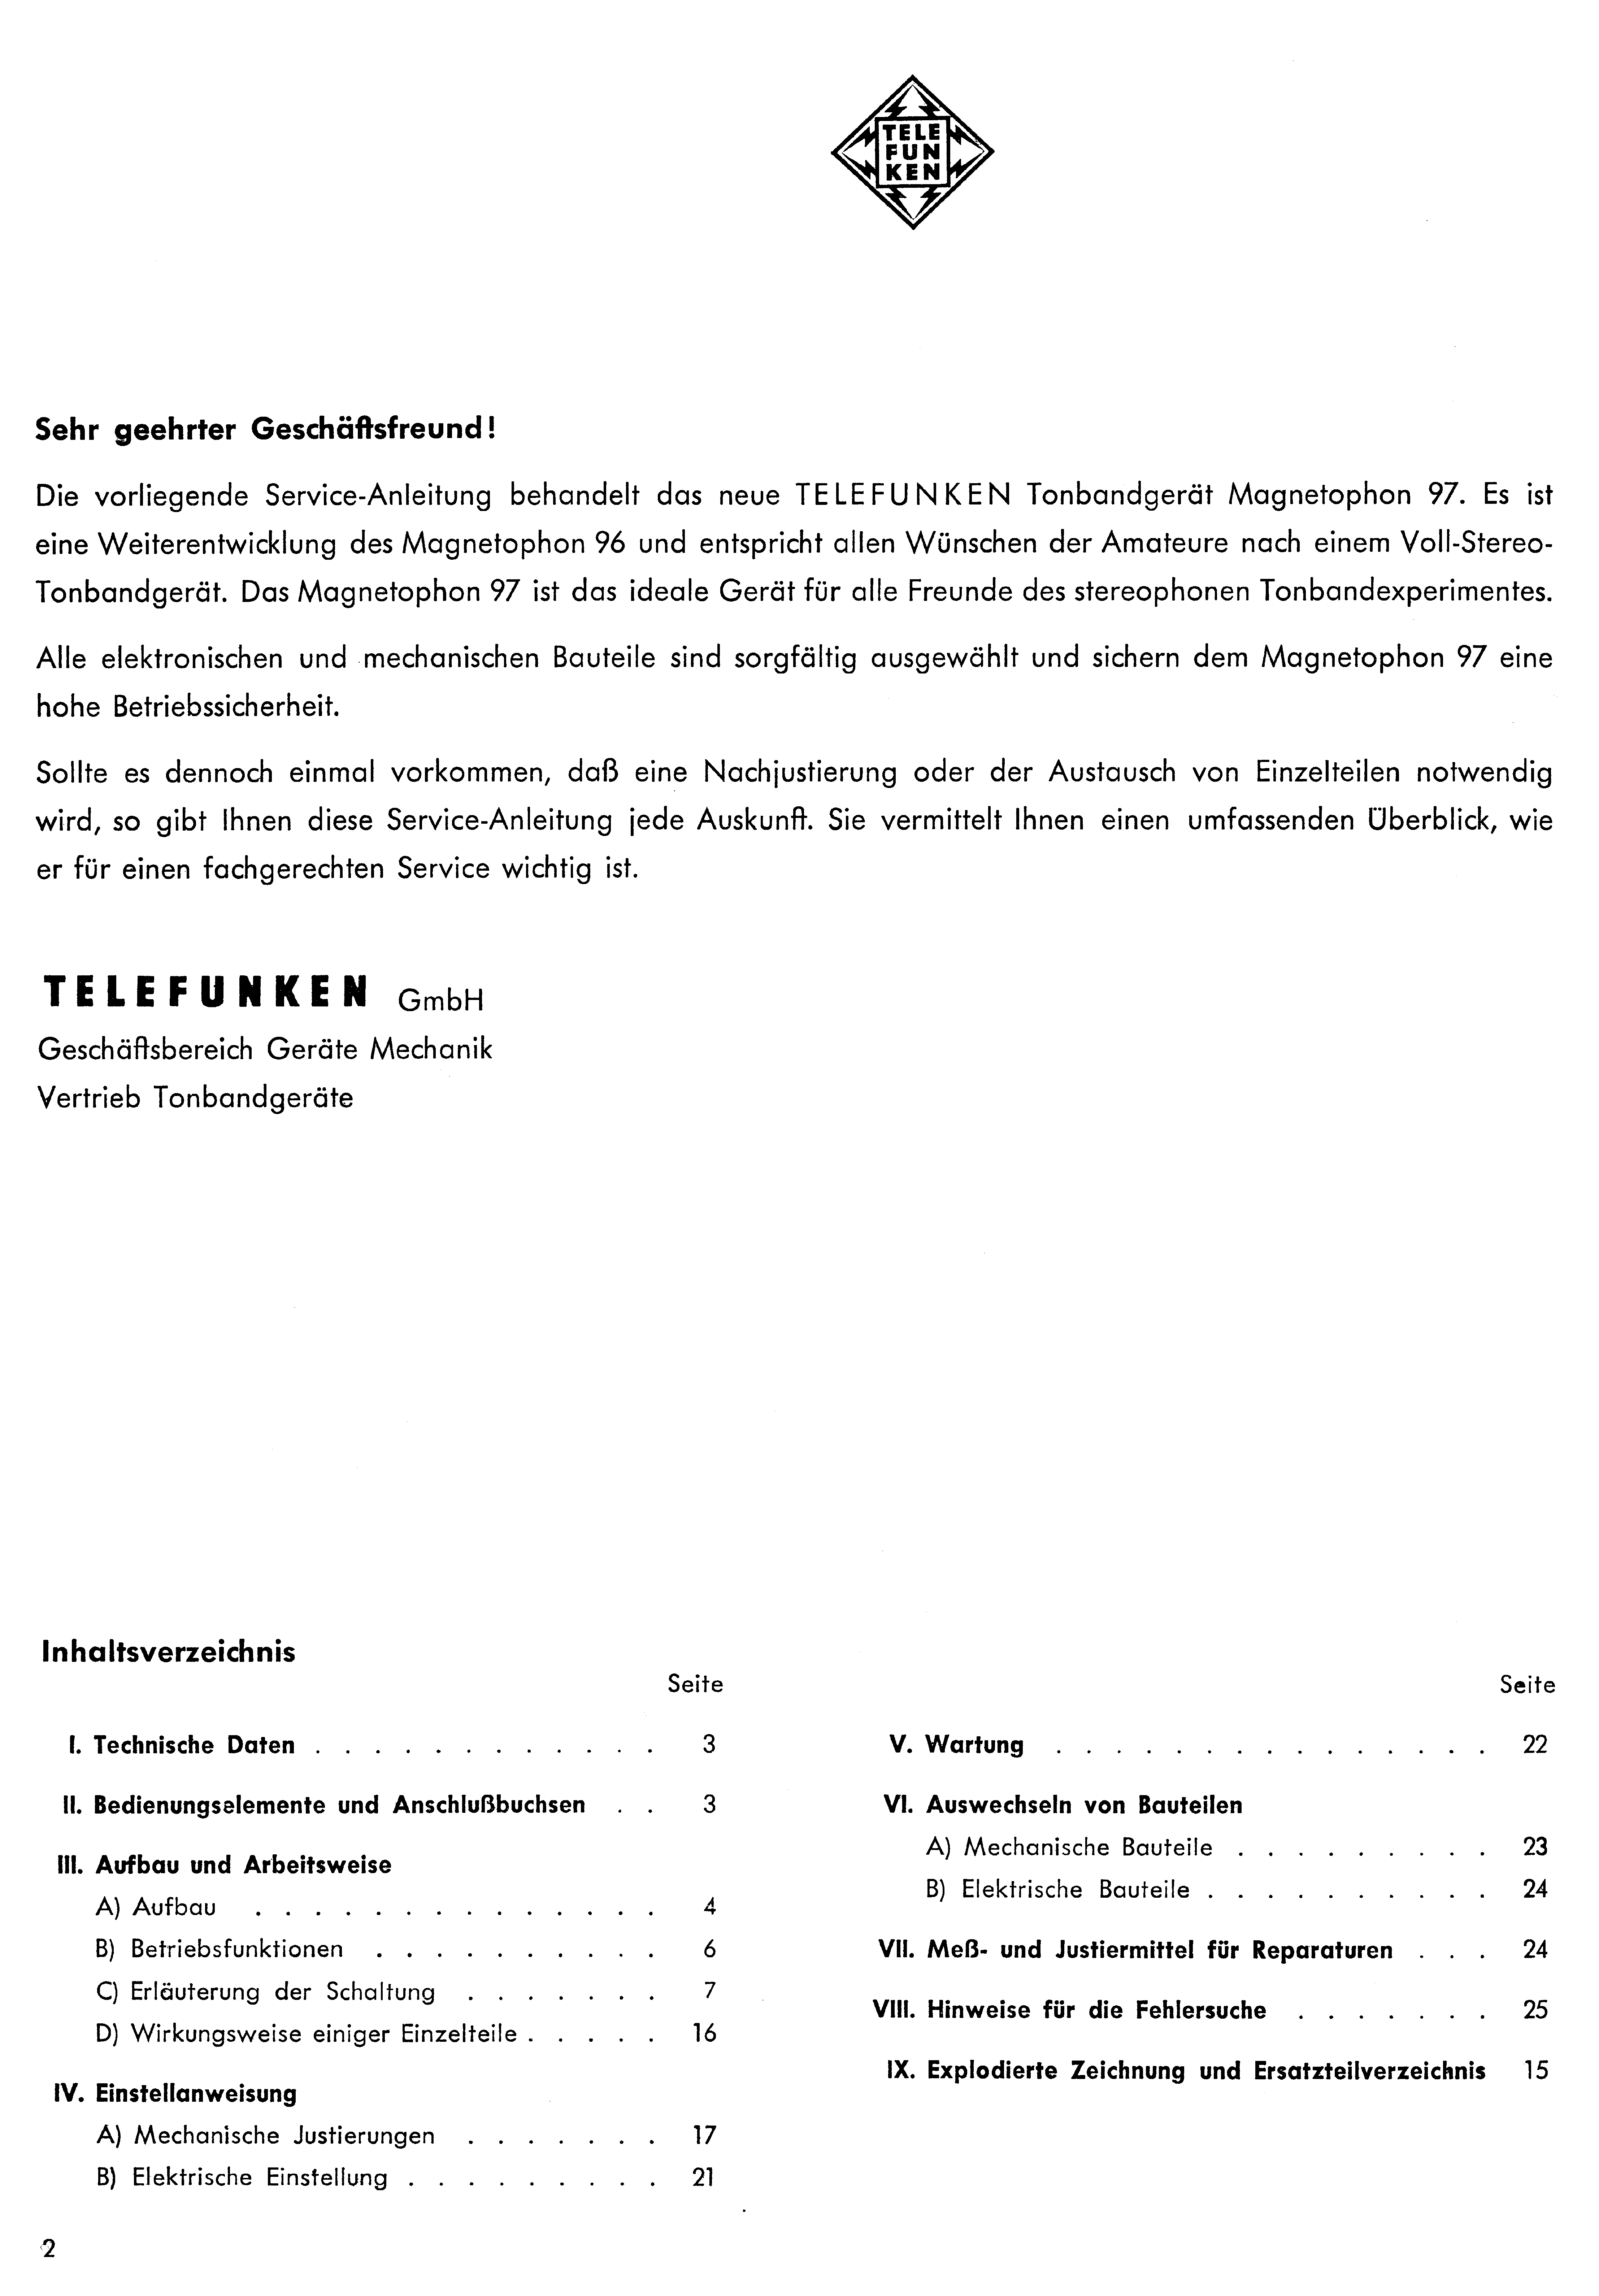 Service Manual-Anleitung für Telefunken Magnetophon 97 